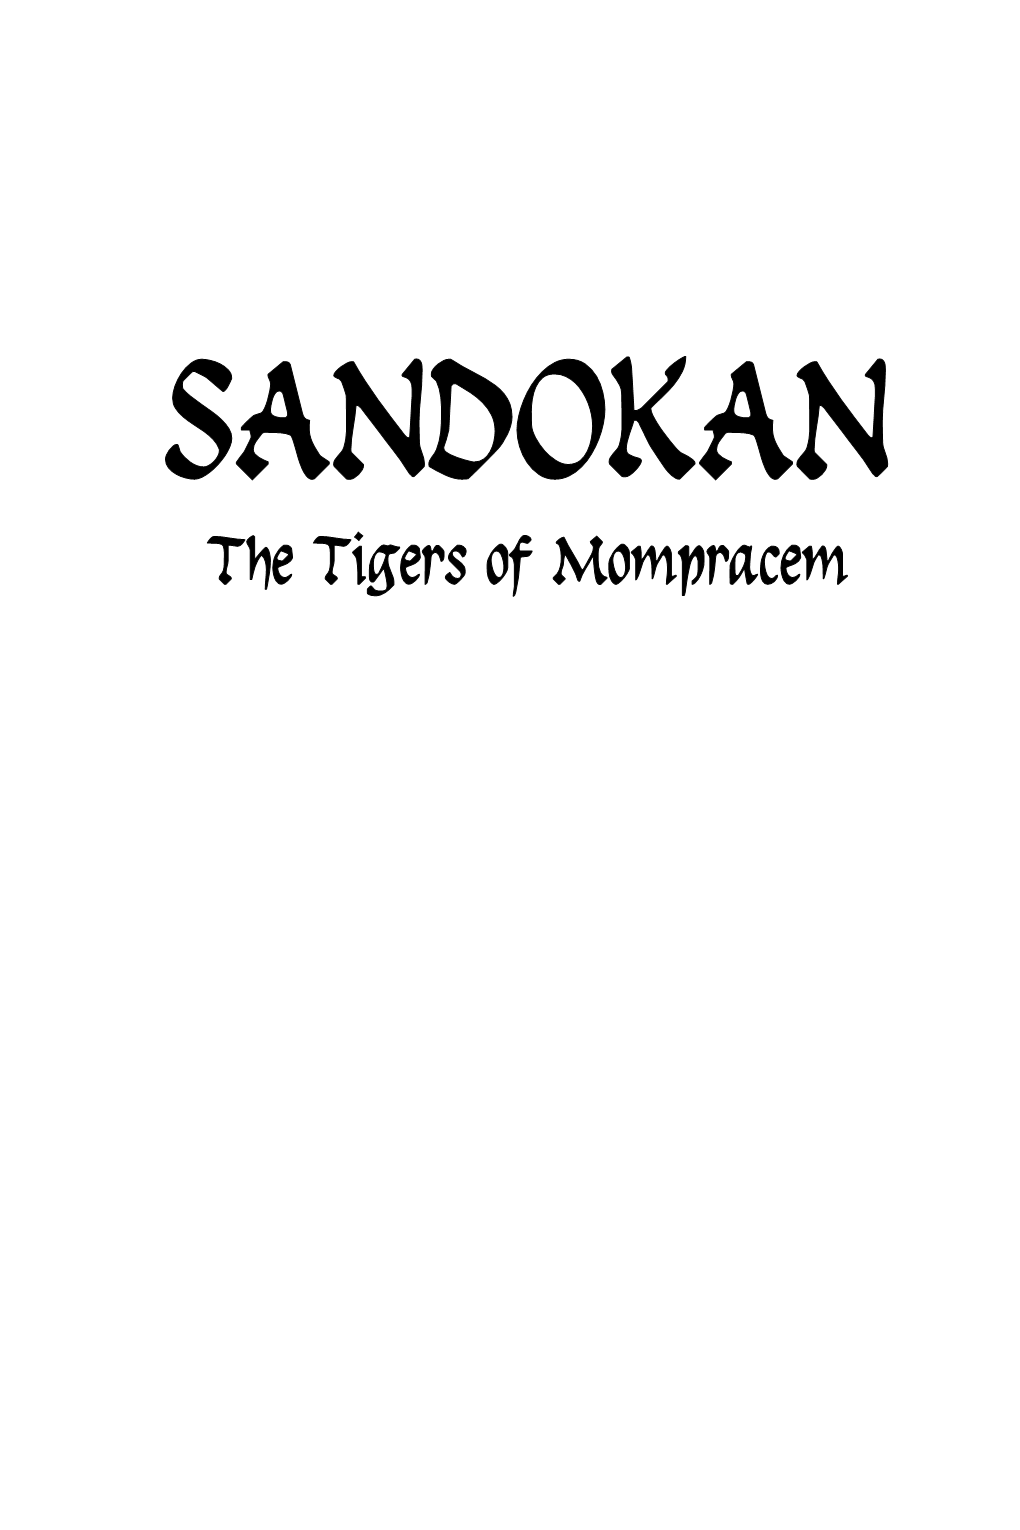 Sandokan: the Tigers of Mompracem by Emilio Salgari Original Title: Le Tigri Di Mompracem First Published in Serial Form in “La Nuova Arena” (1883/1884)